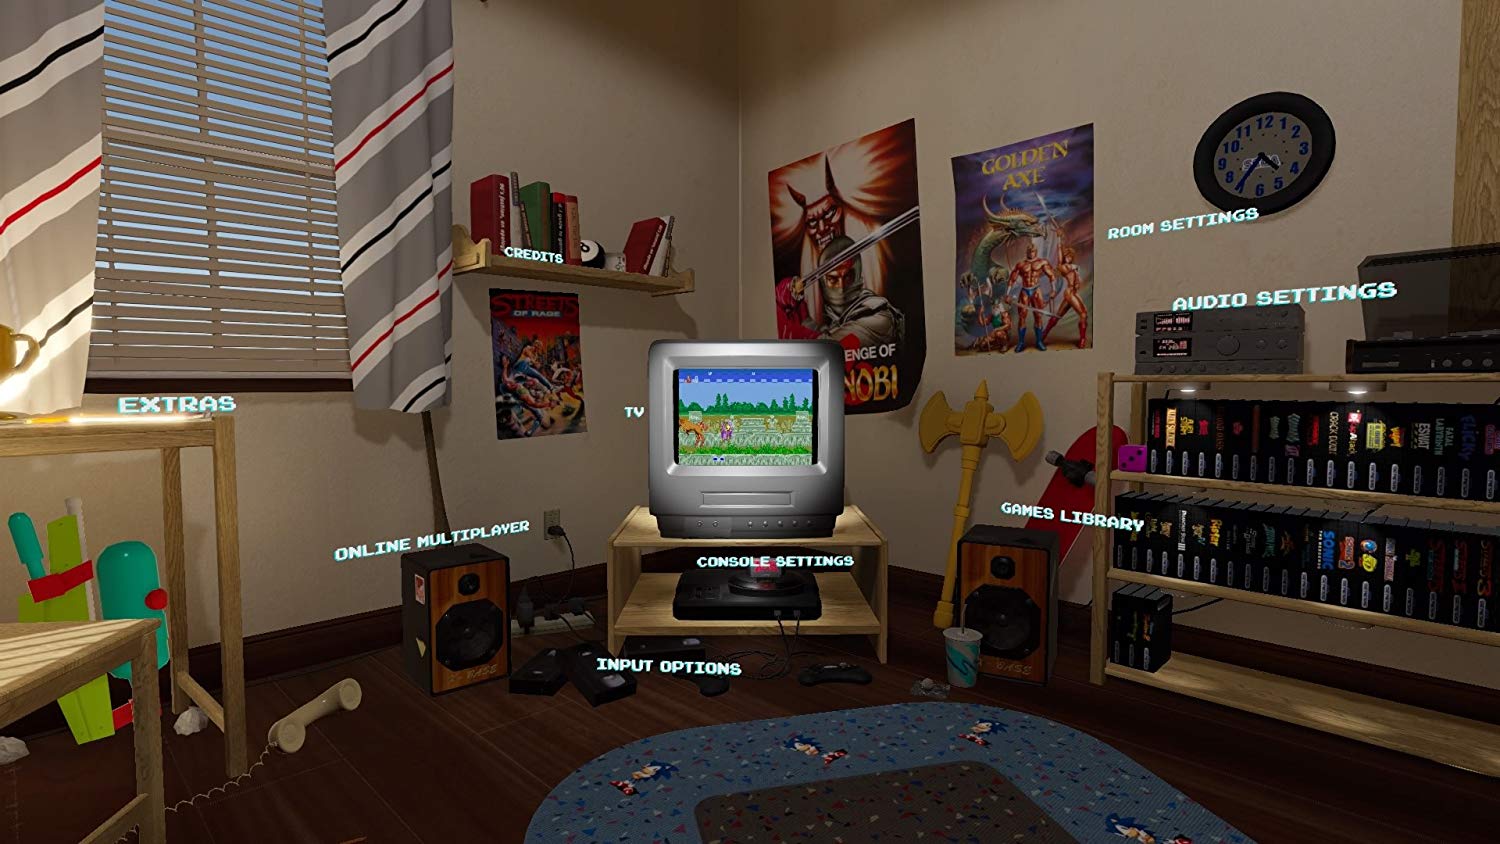 Classic Game Room - SONIC THE HEDGEHOG 3 review for Sega Genesis 